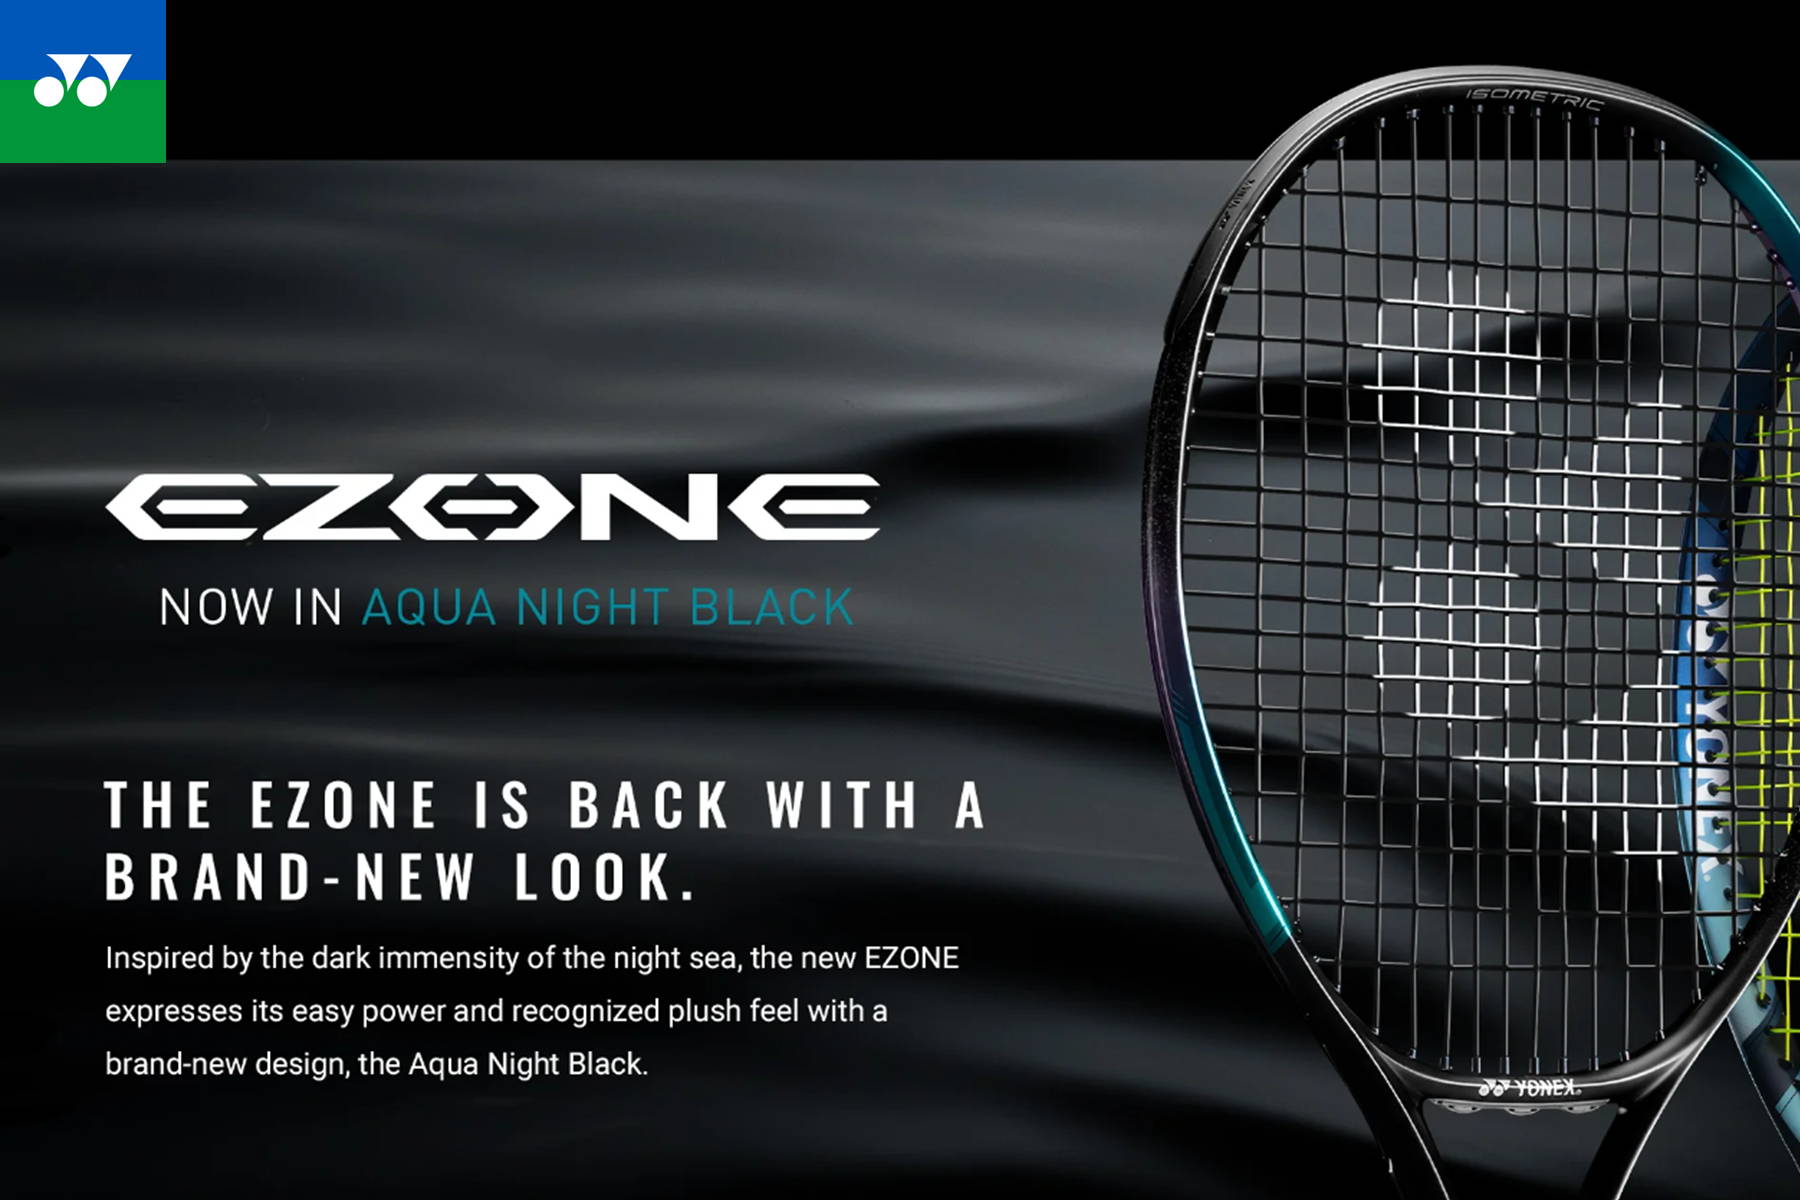 Yonex EZONE Aqua Night Black Tennis Racquet Collection